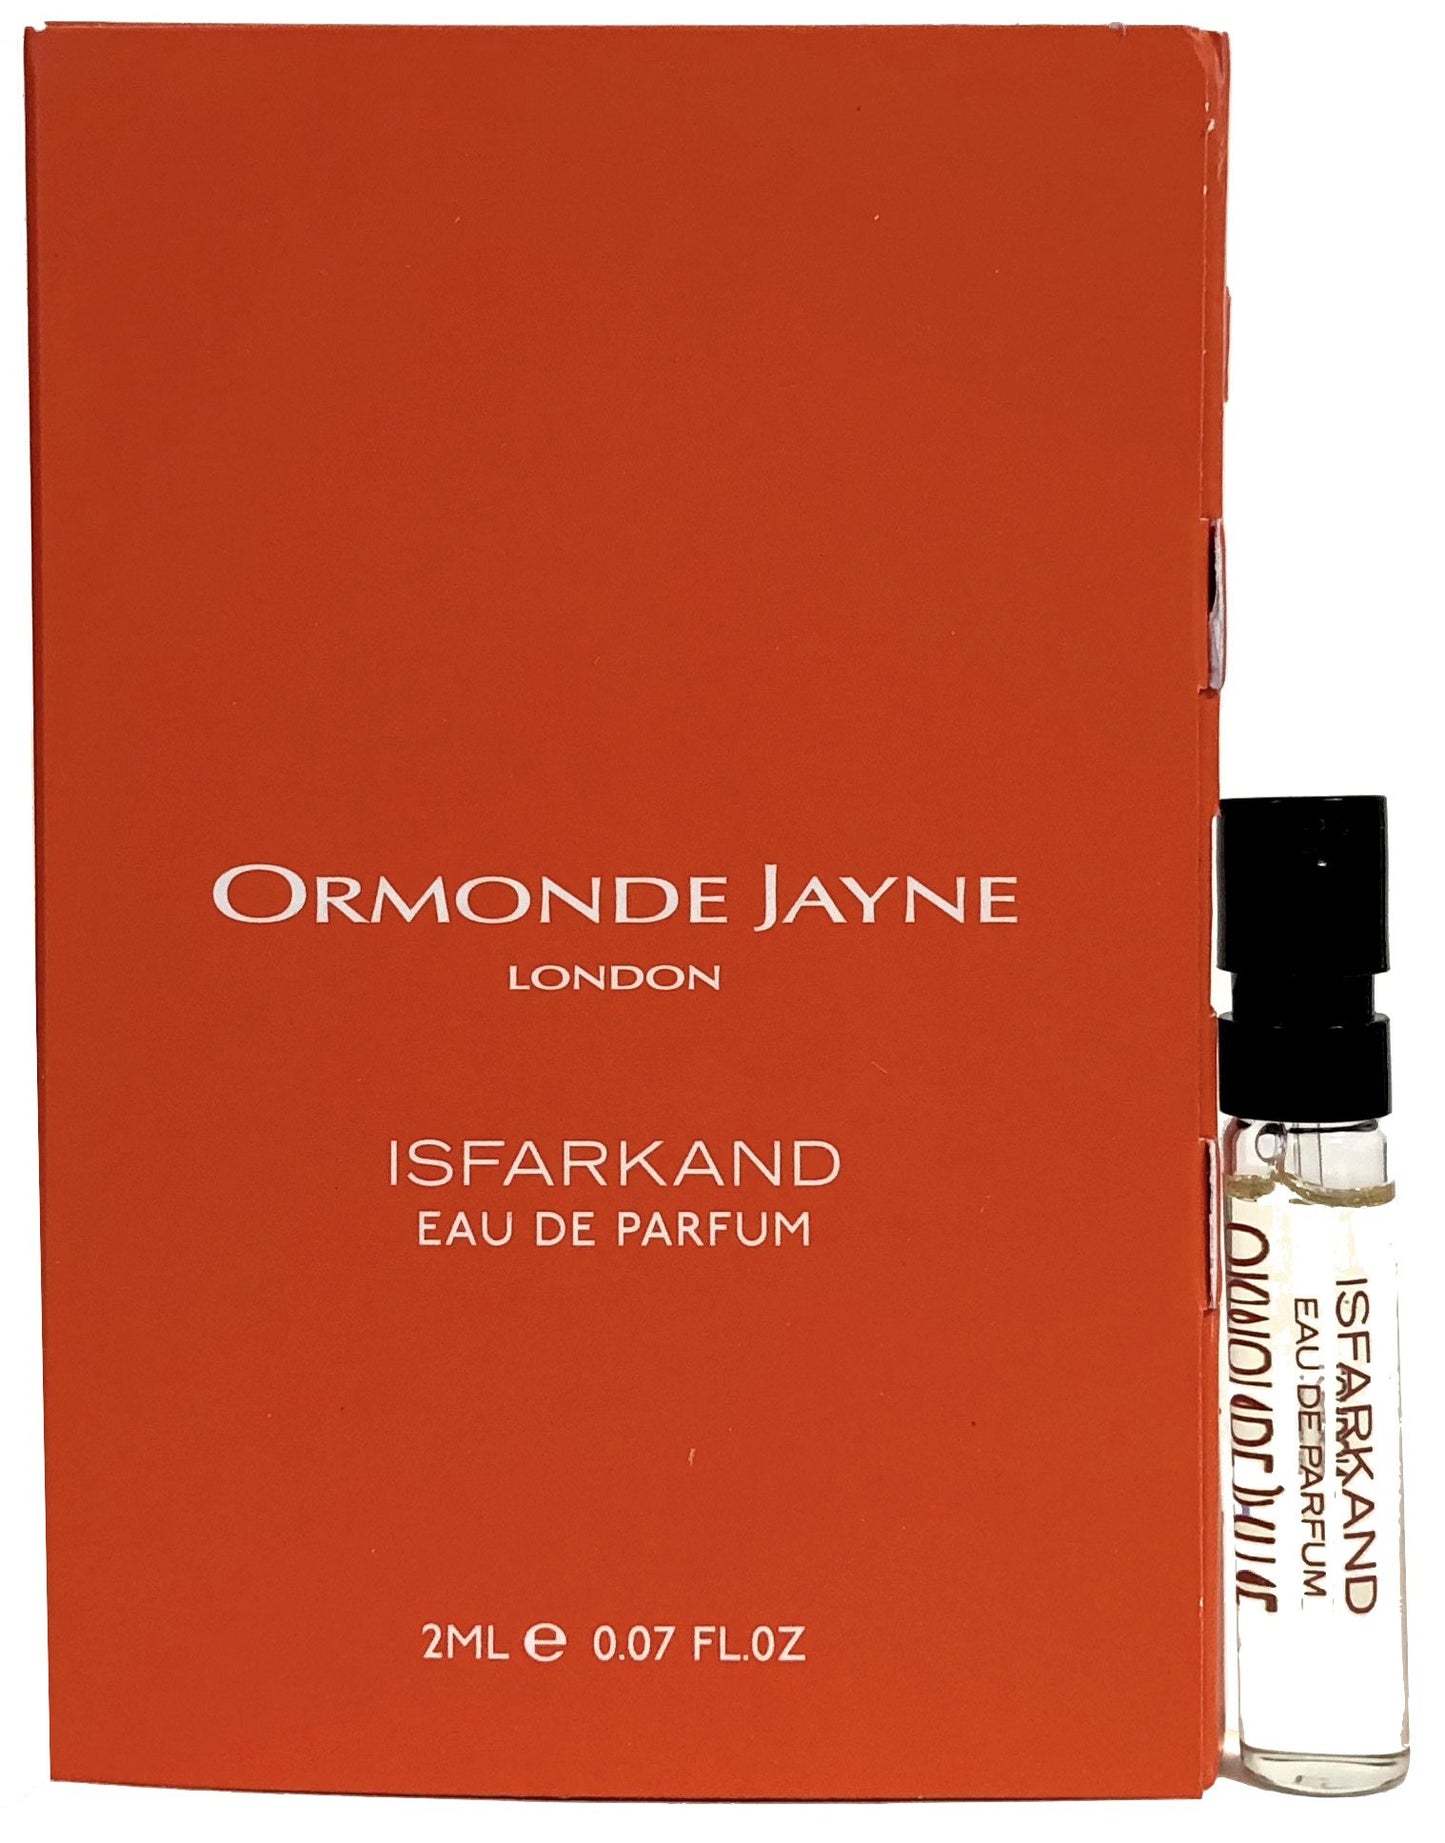 Ormonde Jayne Isfarkand 2ml uradni vzorci parfumov